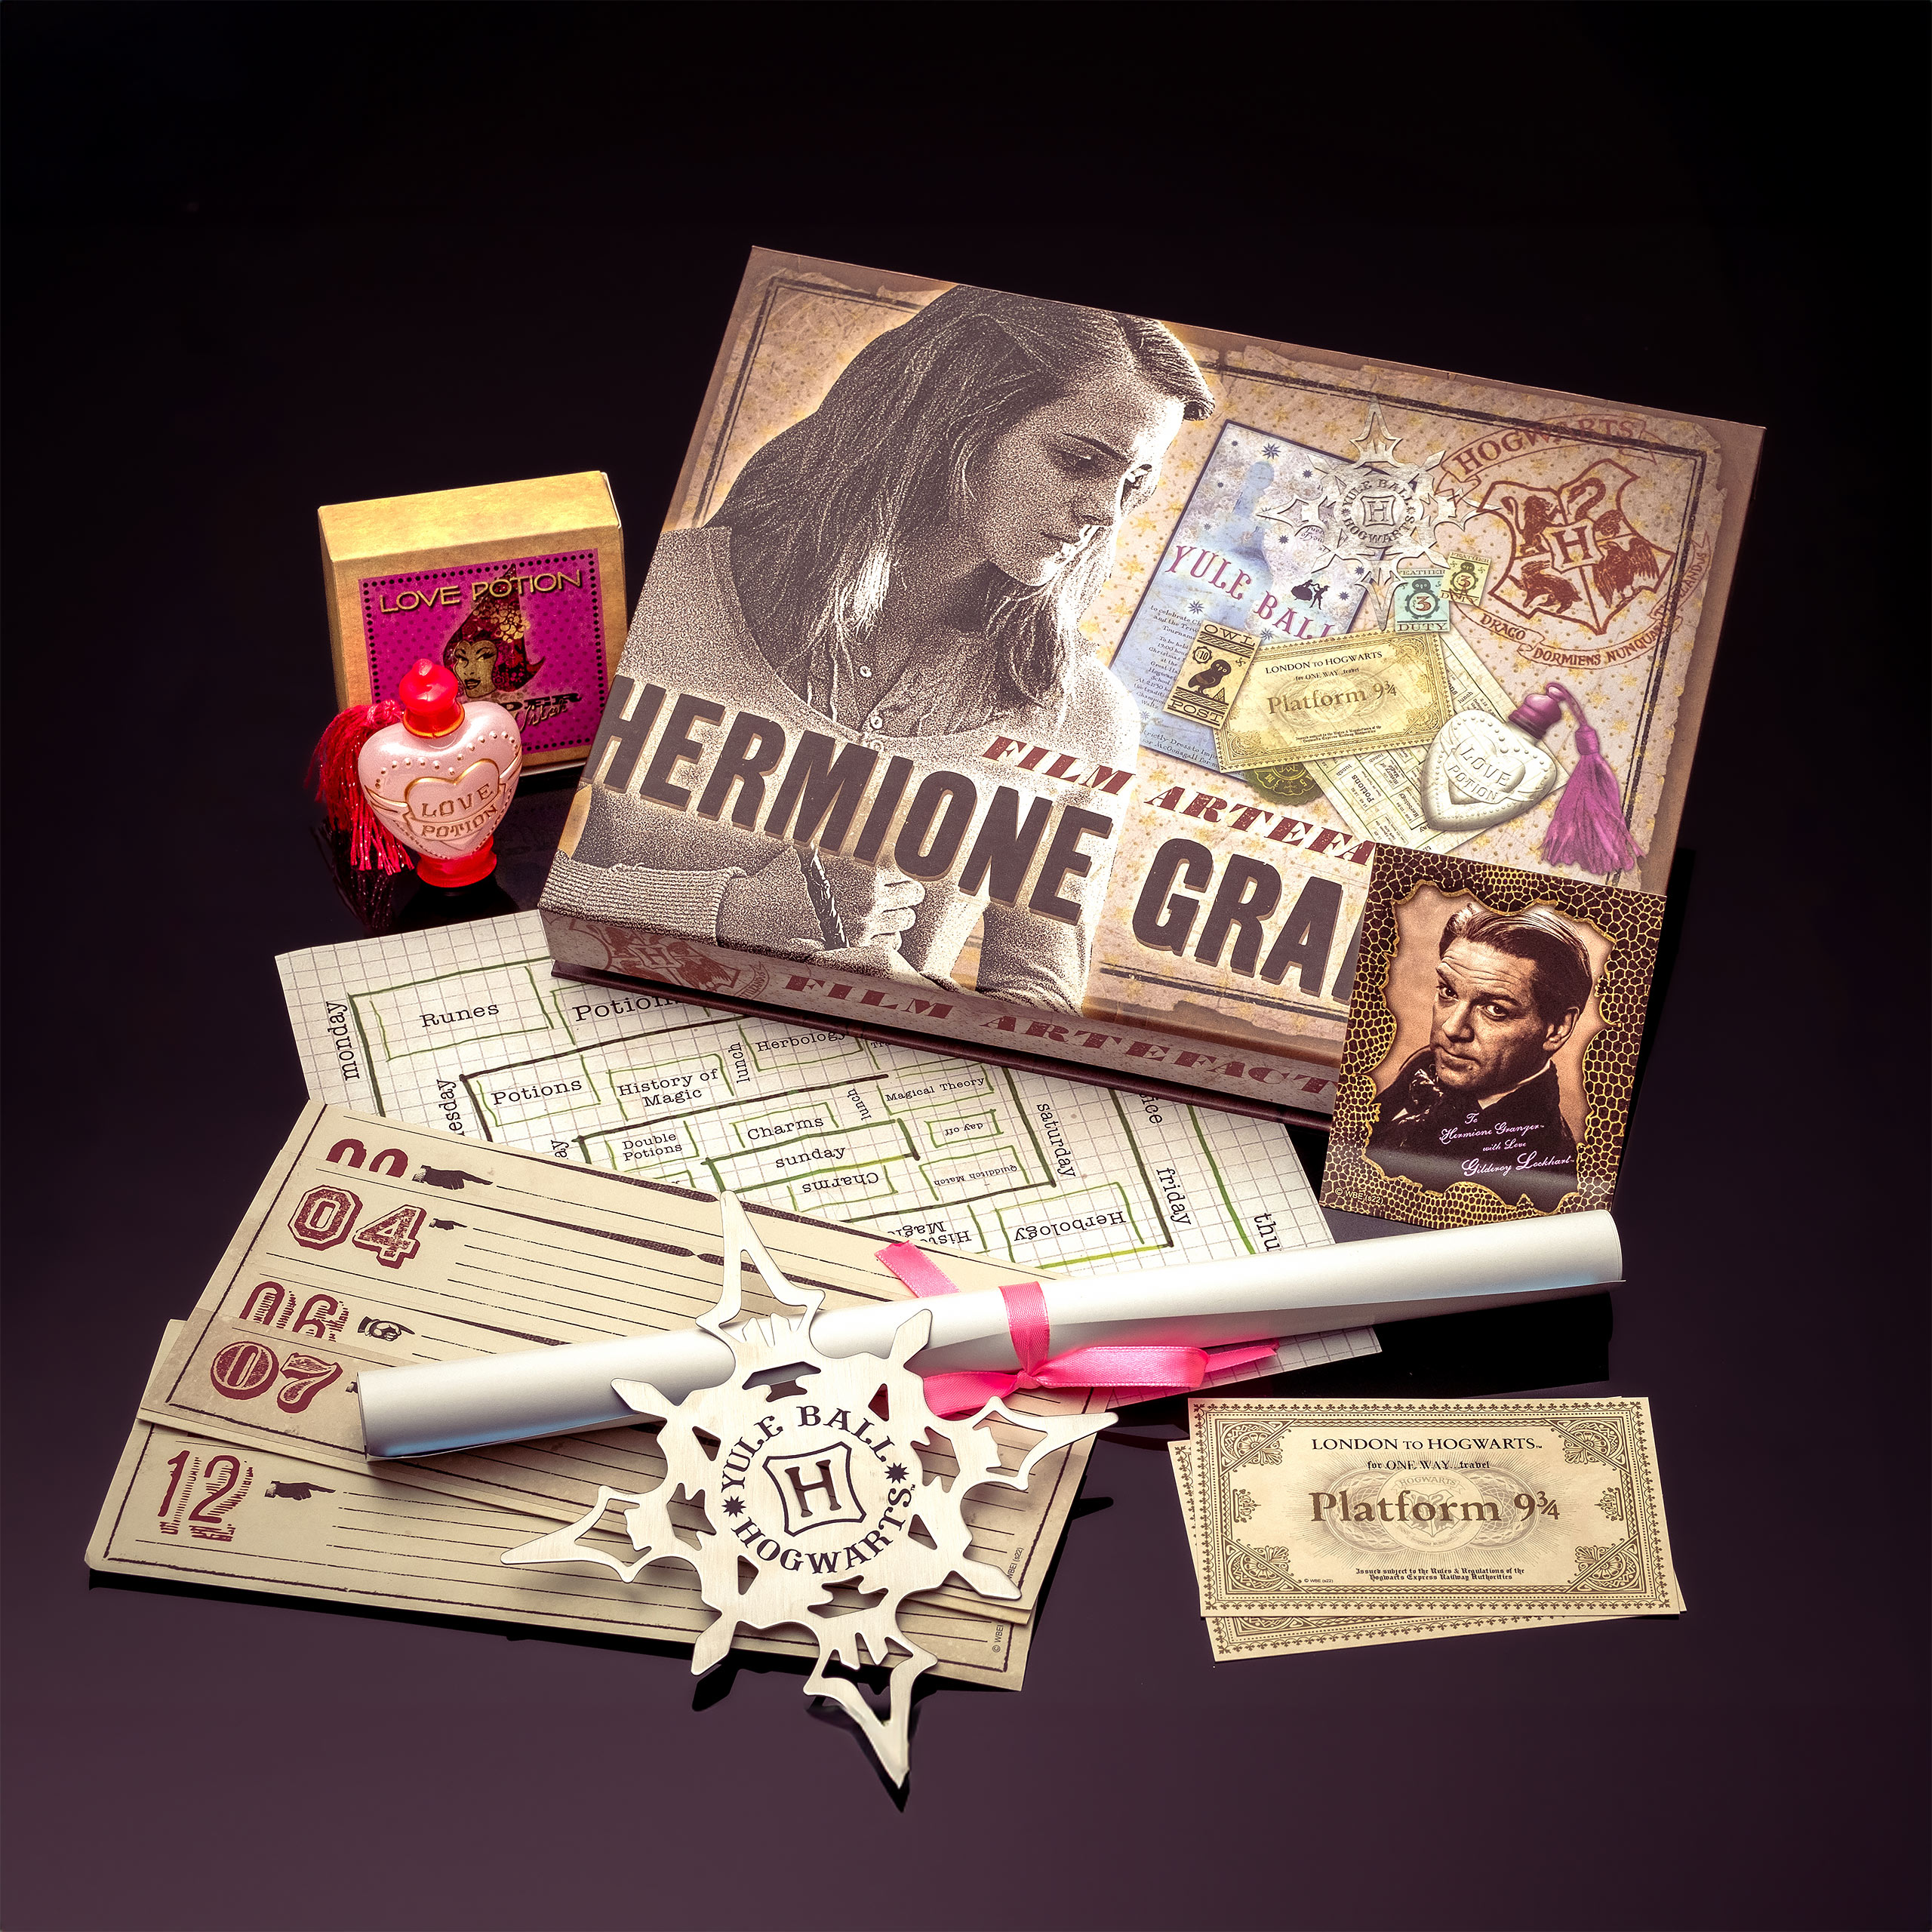 Hermione Granger Artifact Box